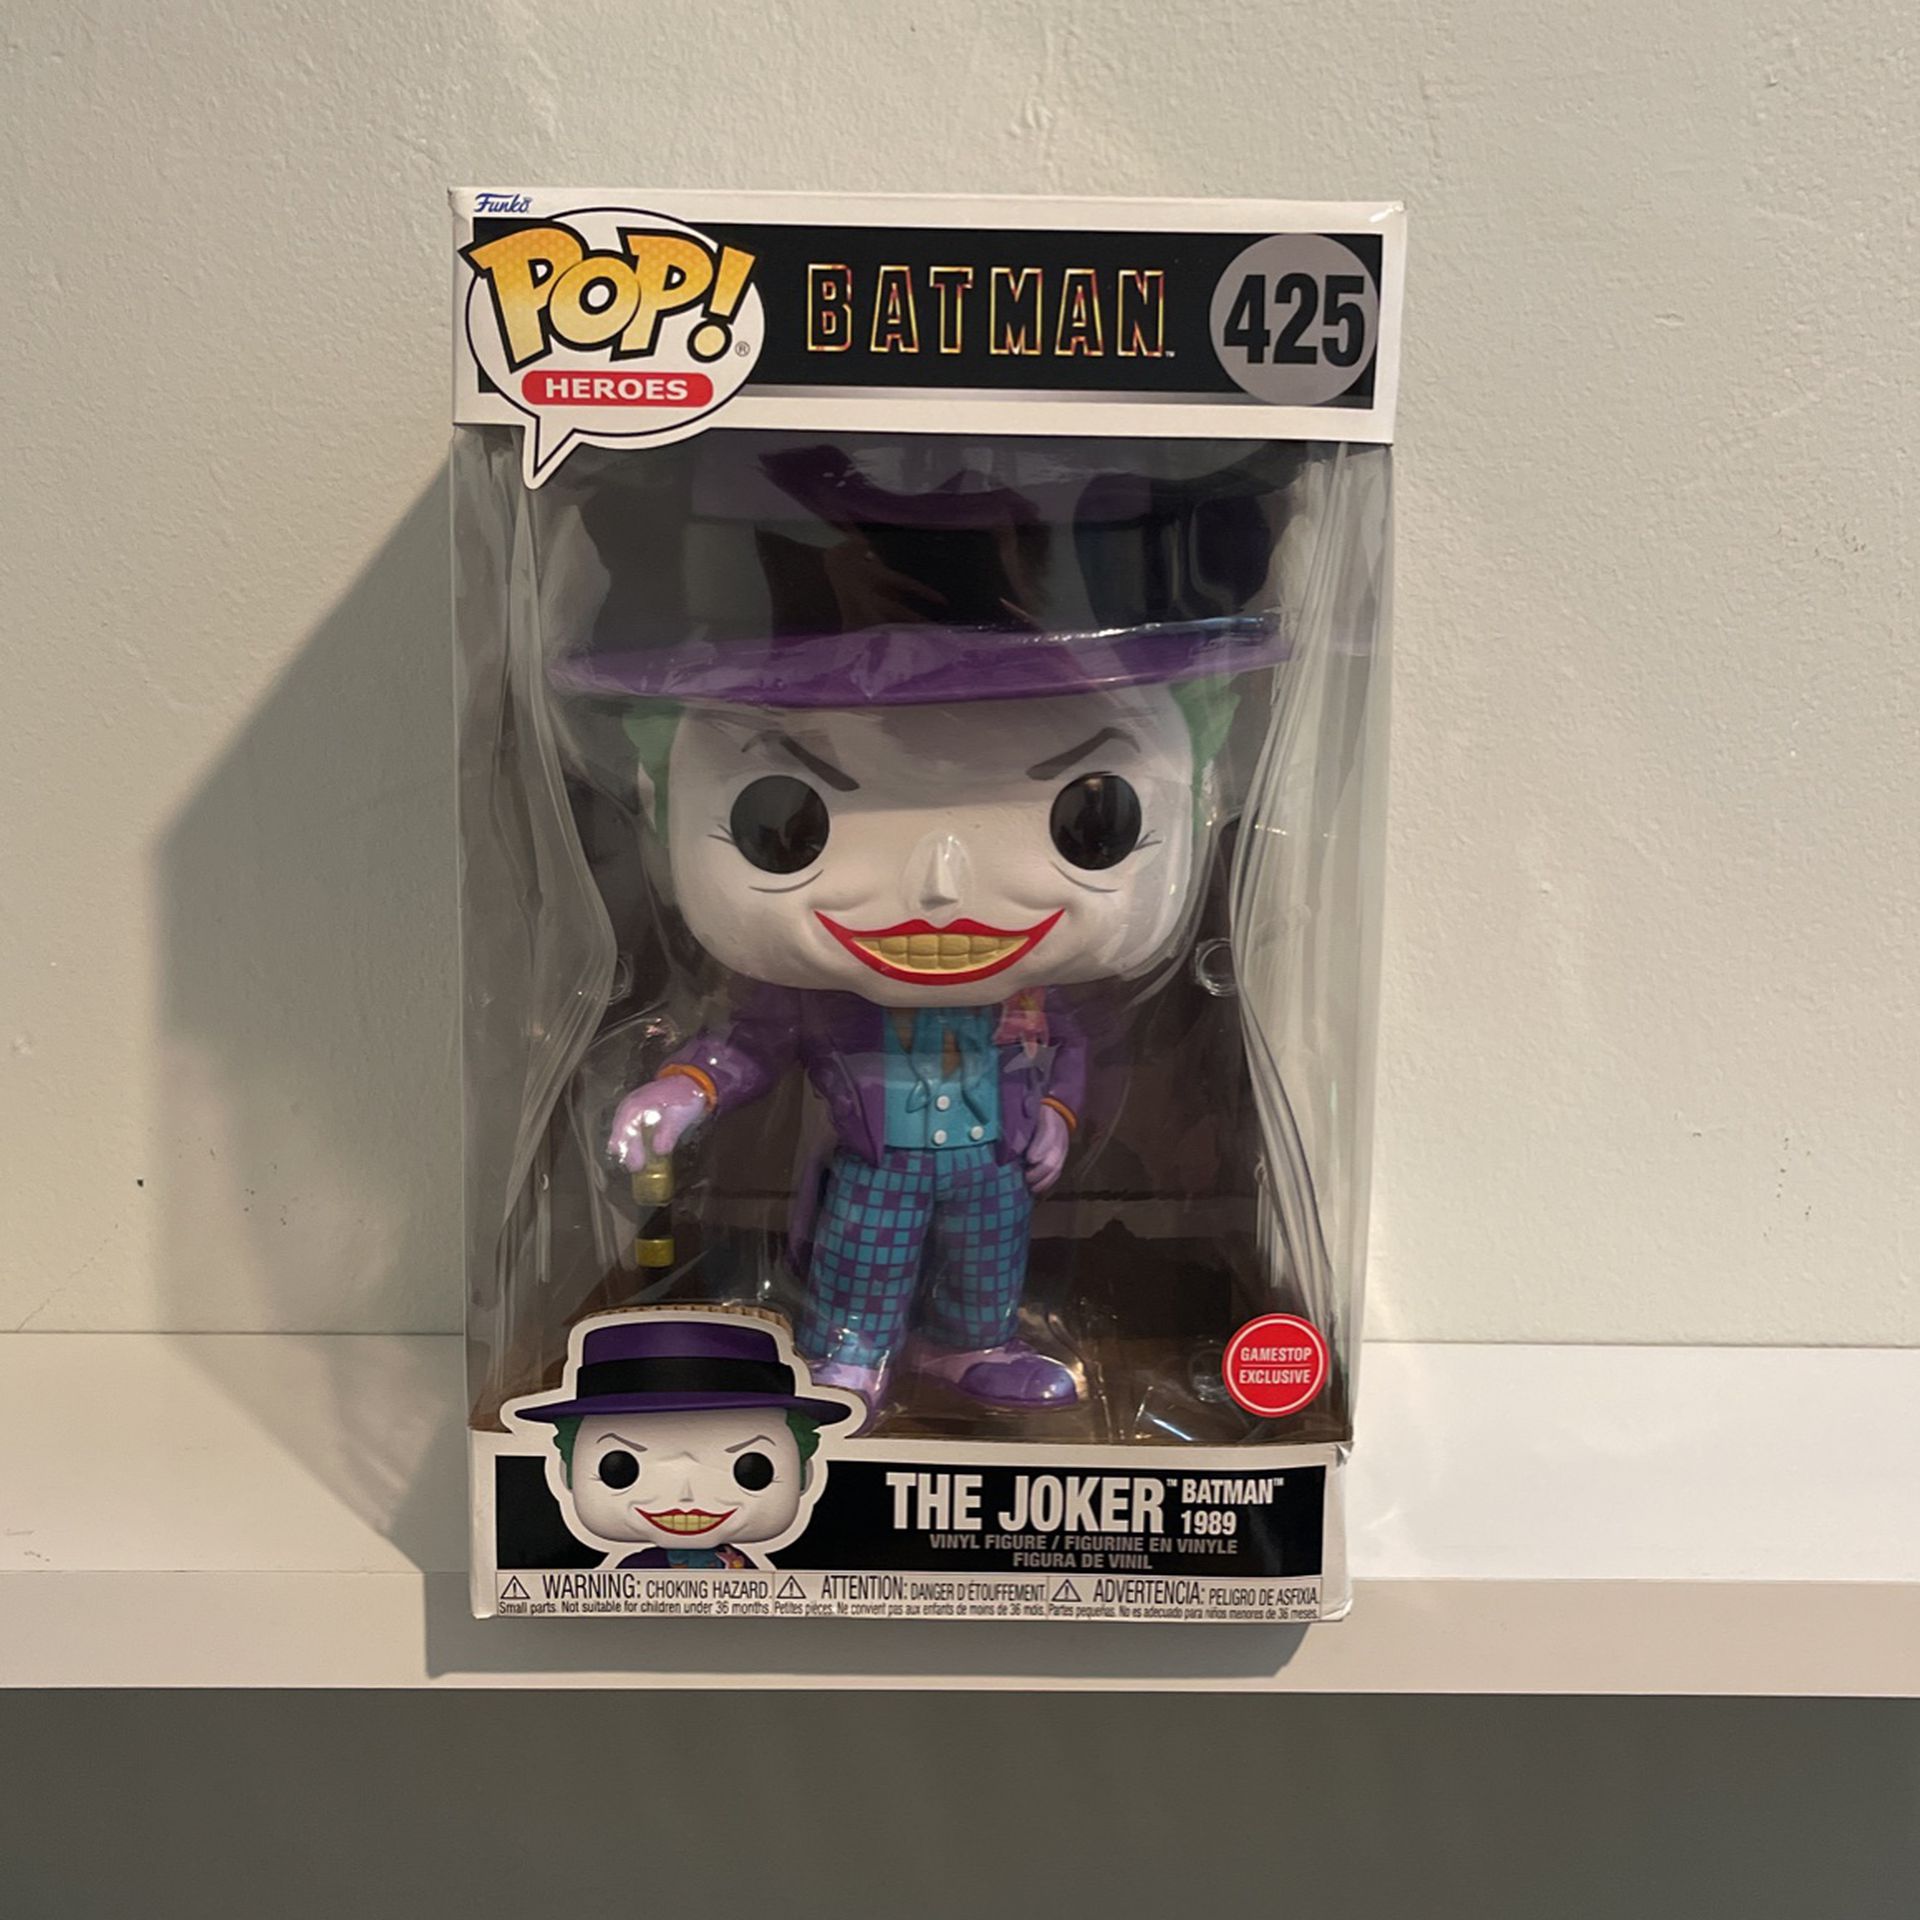 The Joker Batman 1989 Funko Pop 425